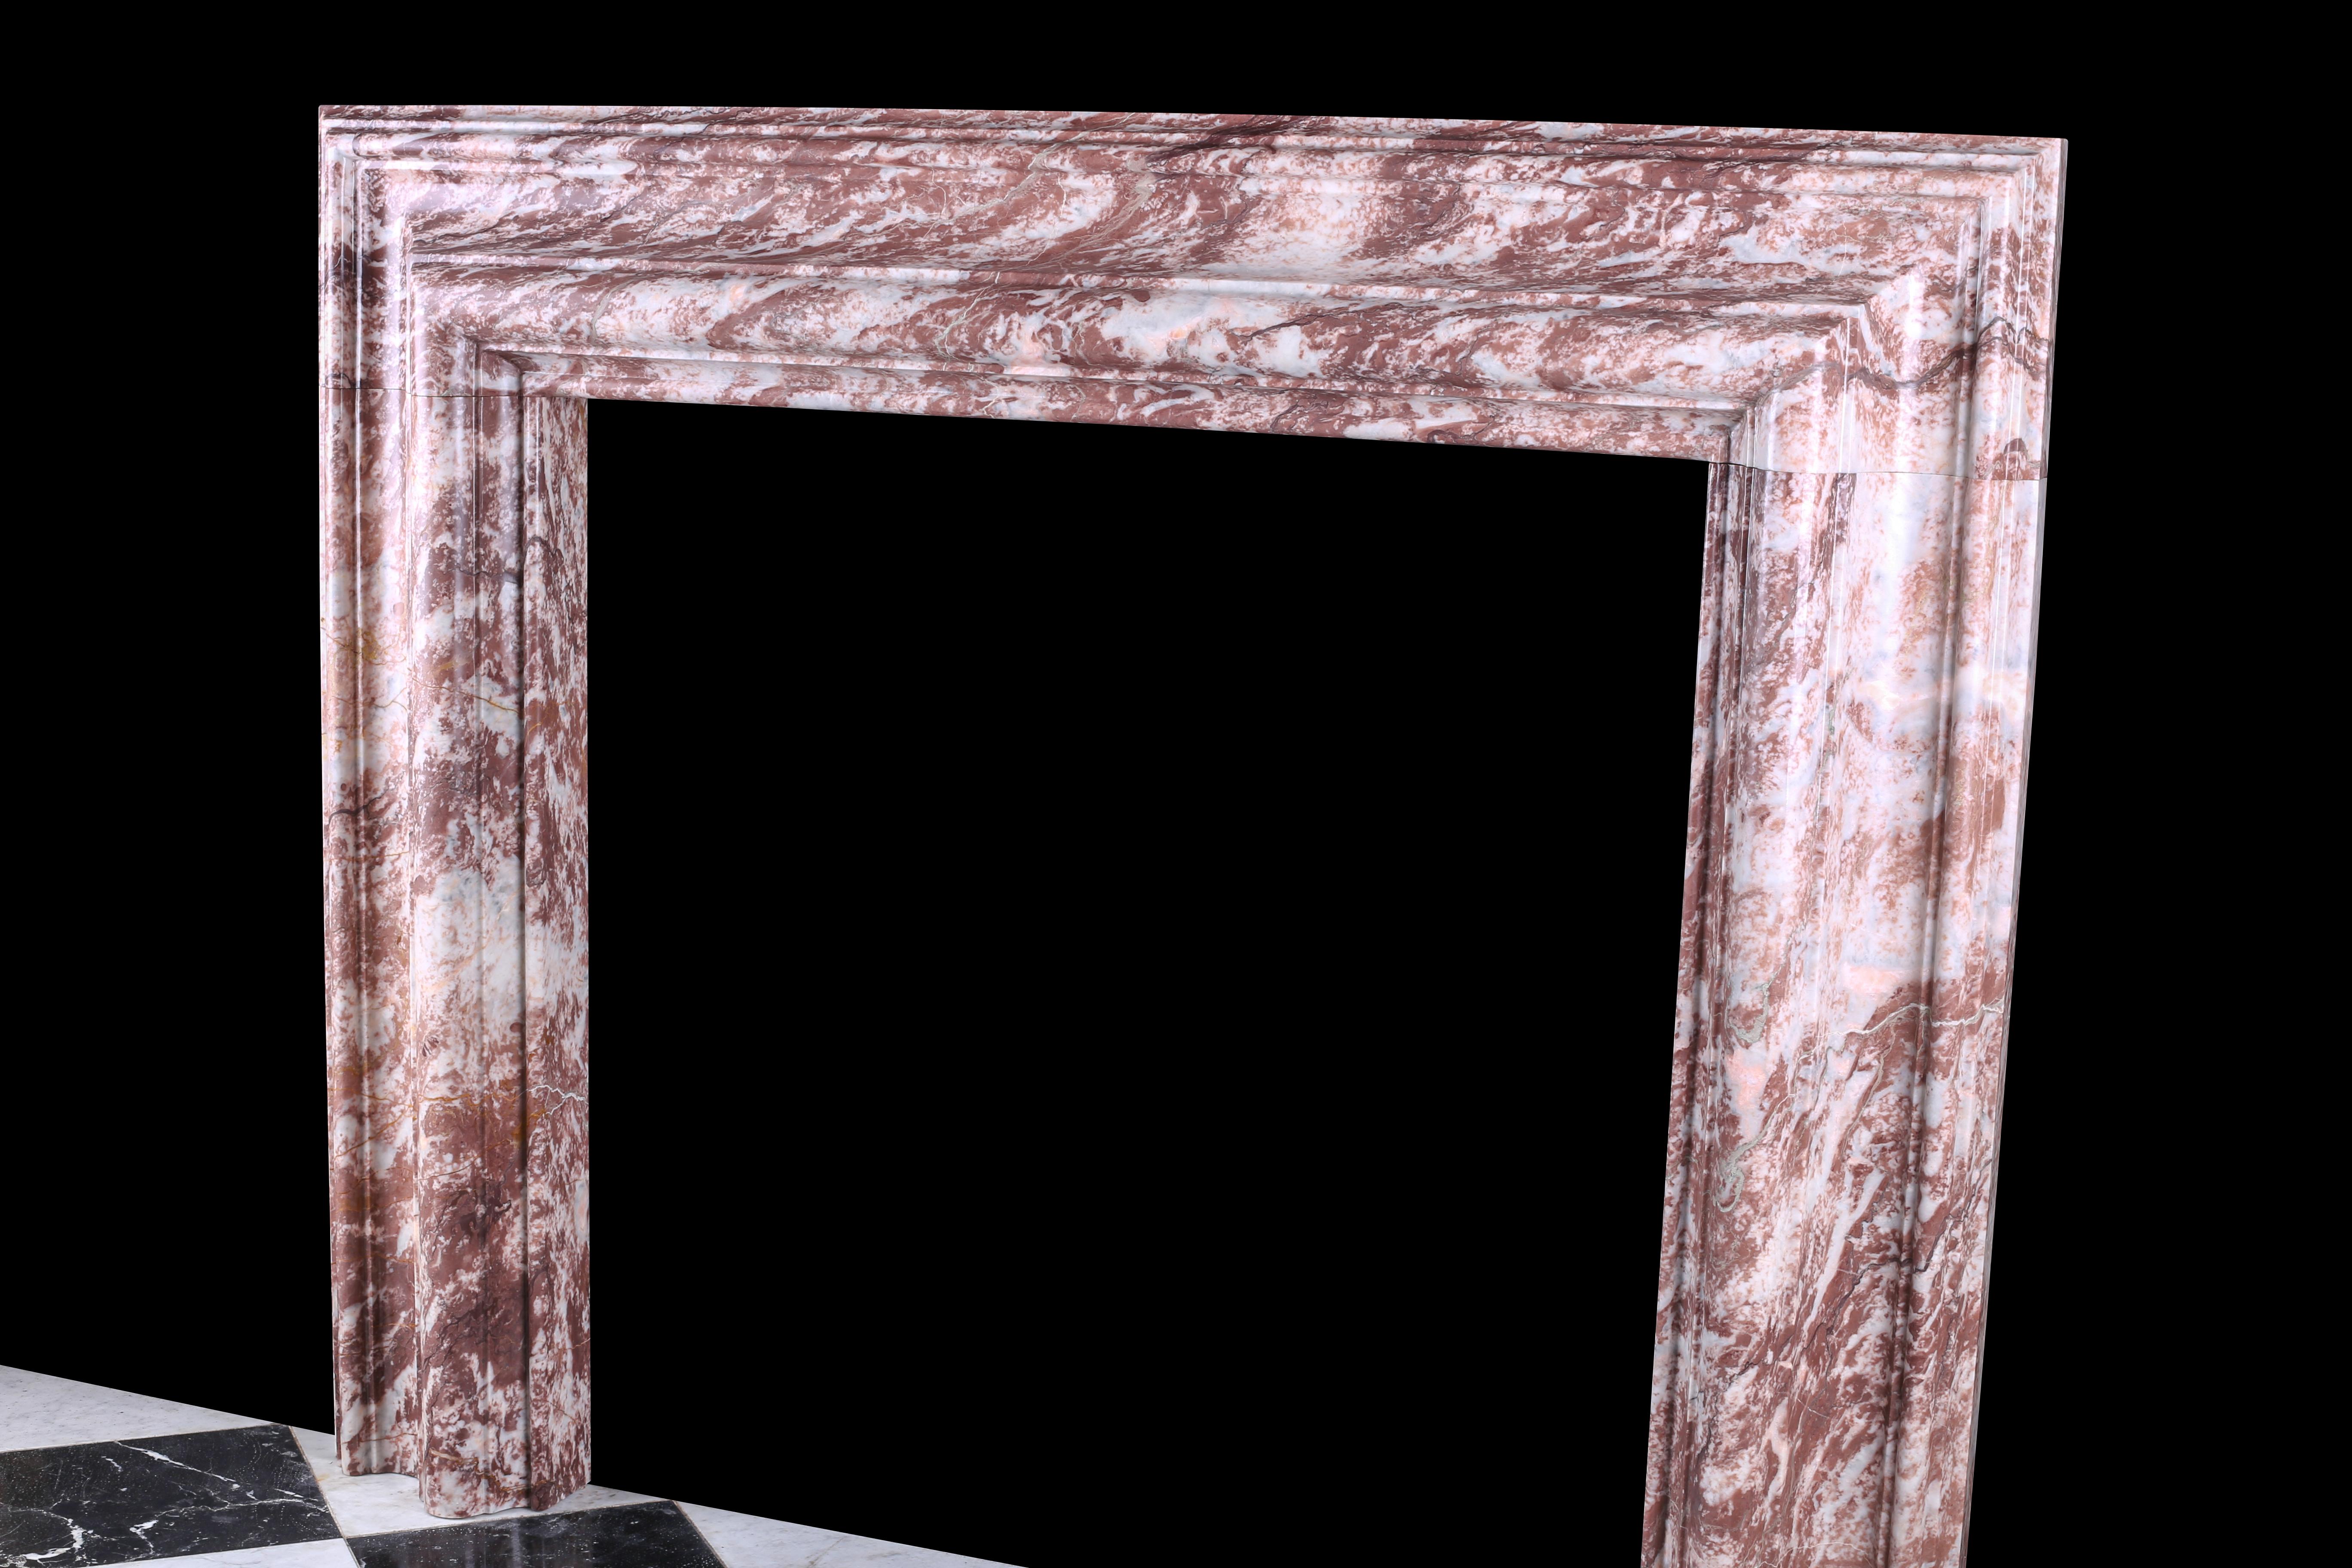 An elegant Regency Baroque Bolection fireplace surround in Italian Fior di Pesco marble.

Measures: Depth 5